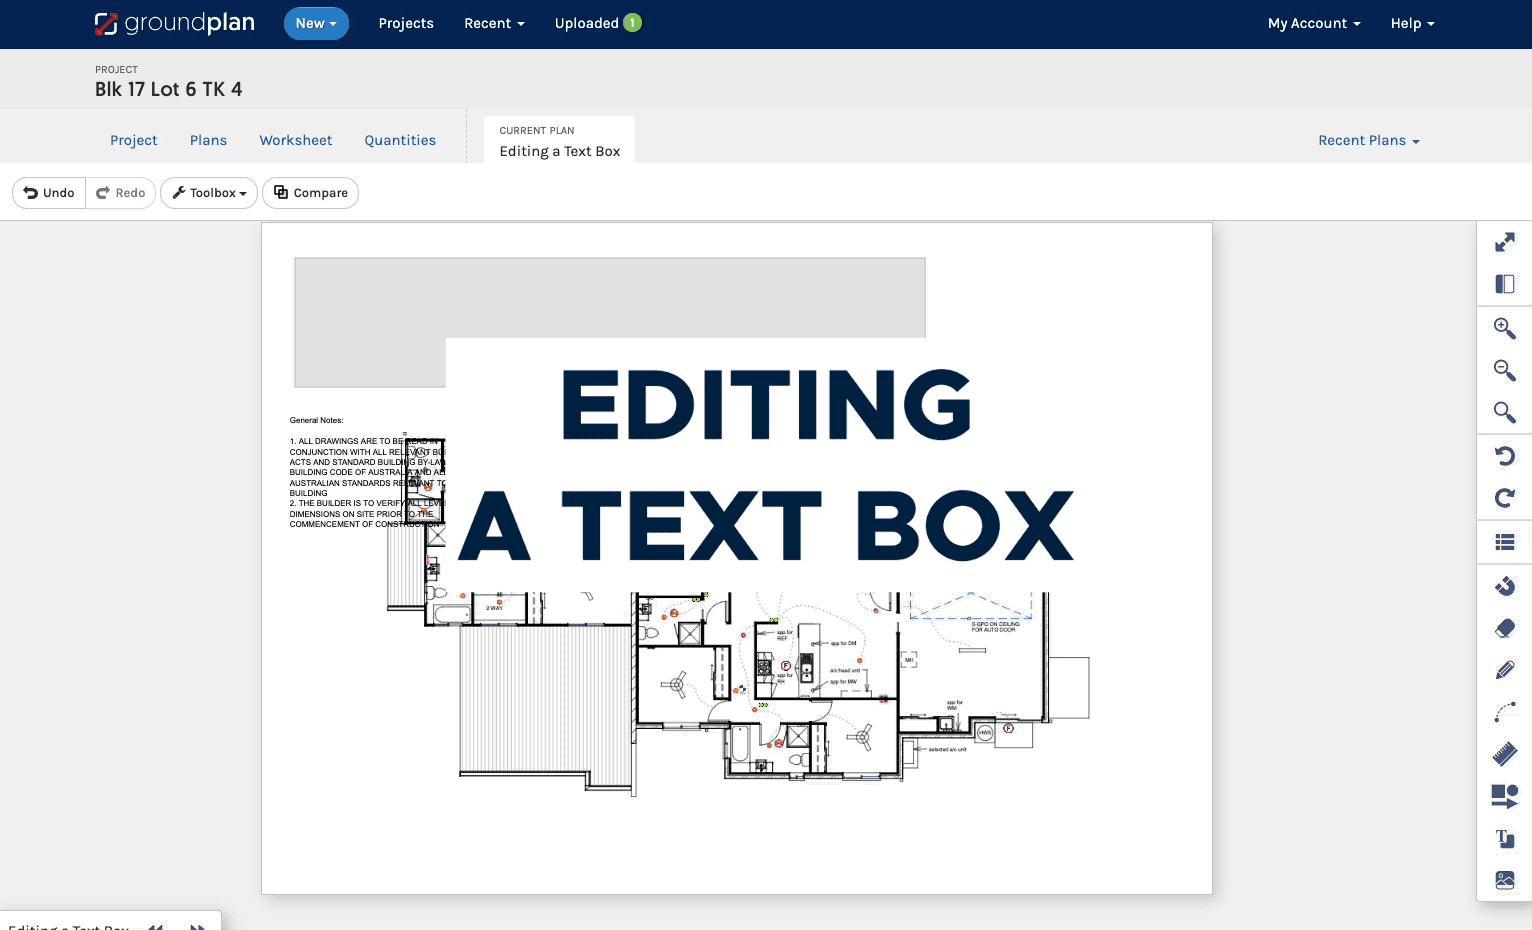 D2 - Editing a Text Box